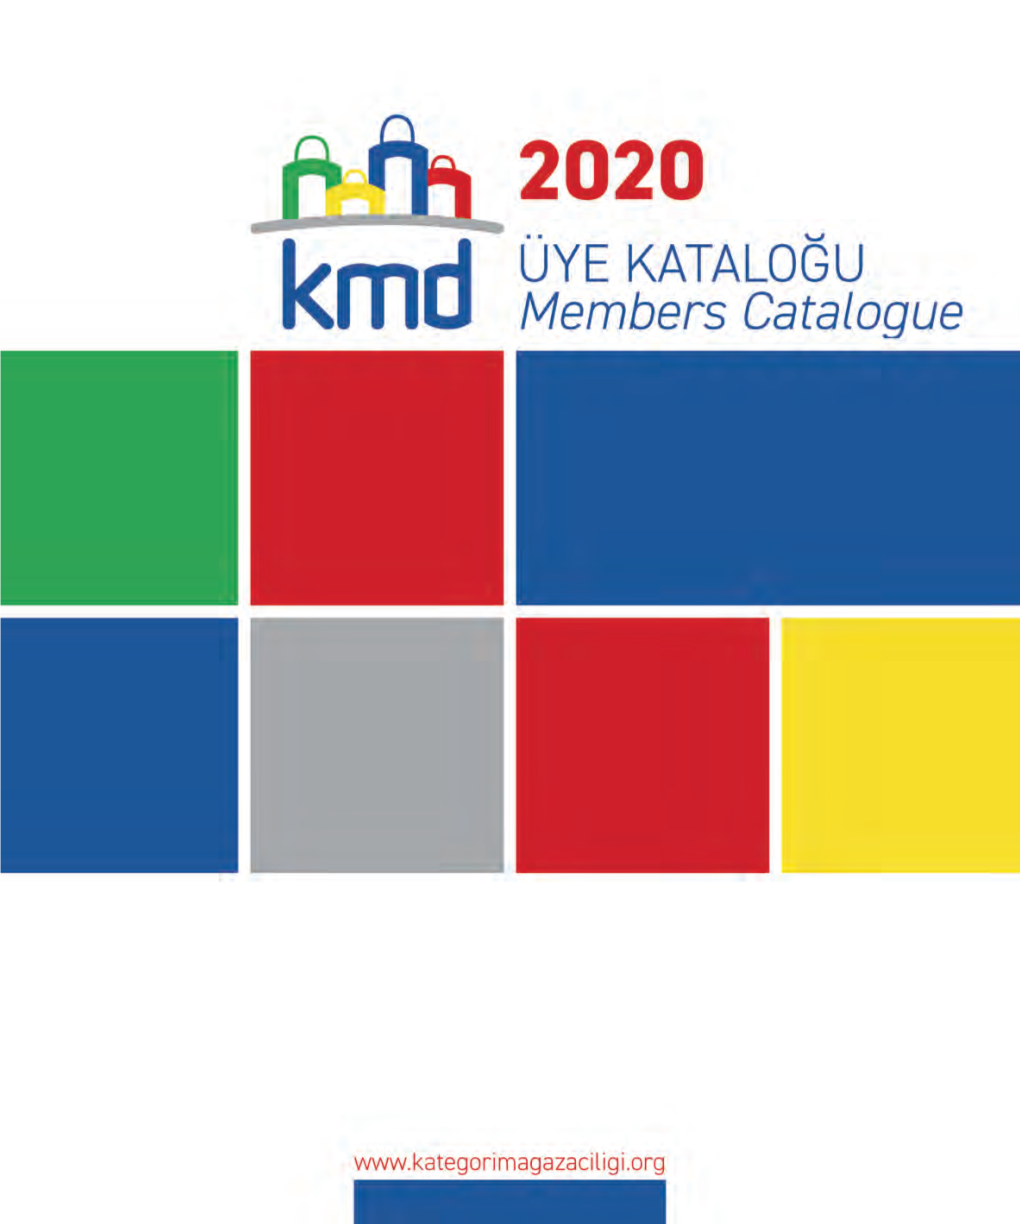 Kmd-Uye-Katalogu-2020-Lo-1.Pdf